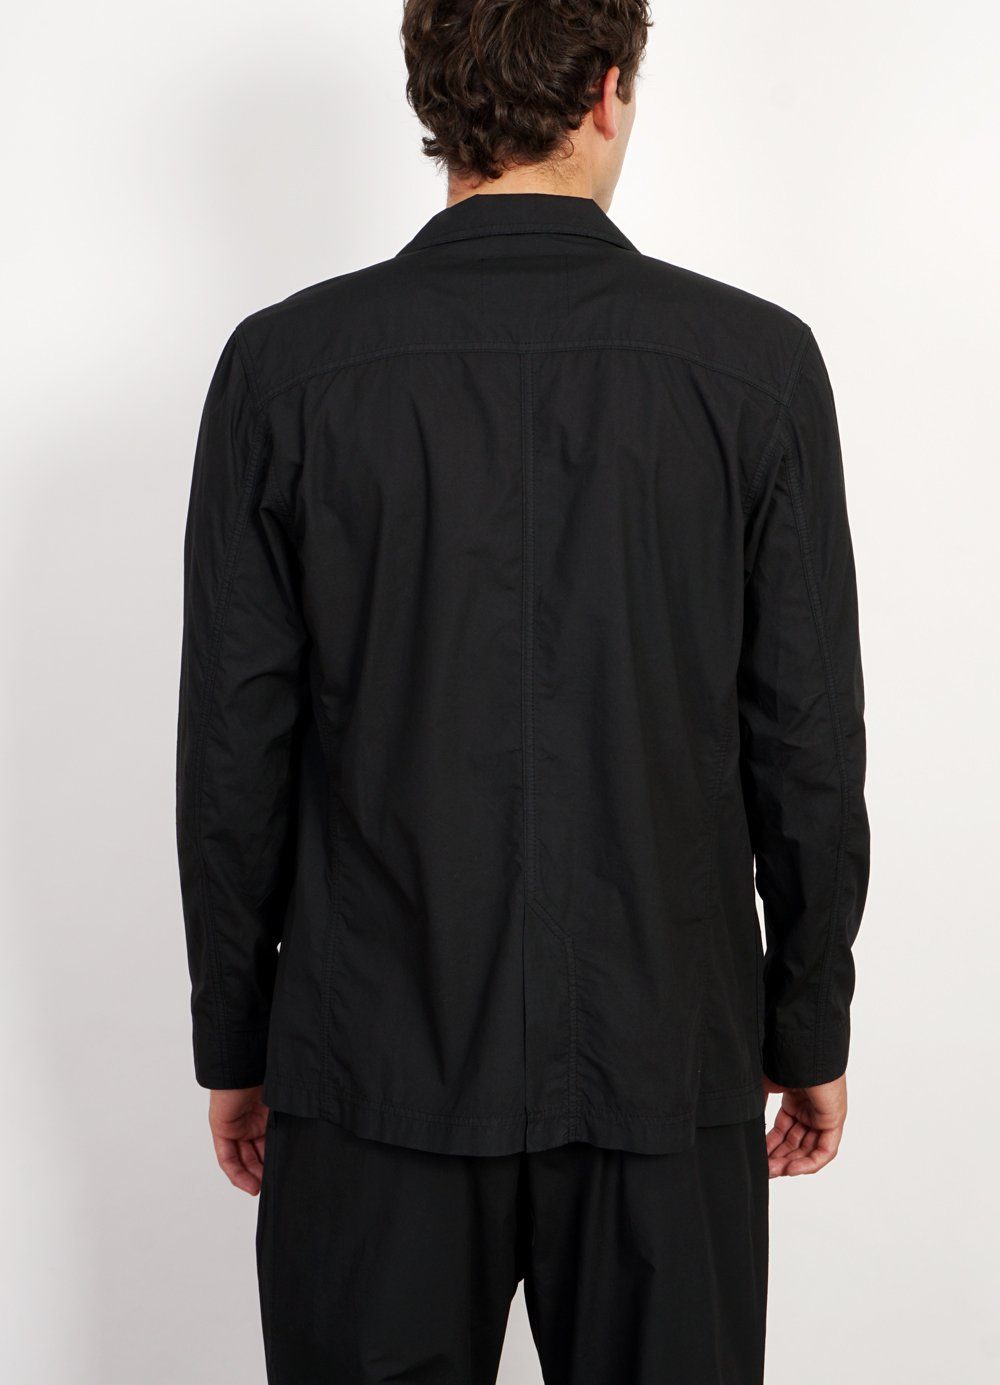 ANDERS | Light Work Jacket | Black -HANSEN Garments- HANSEN Garments